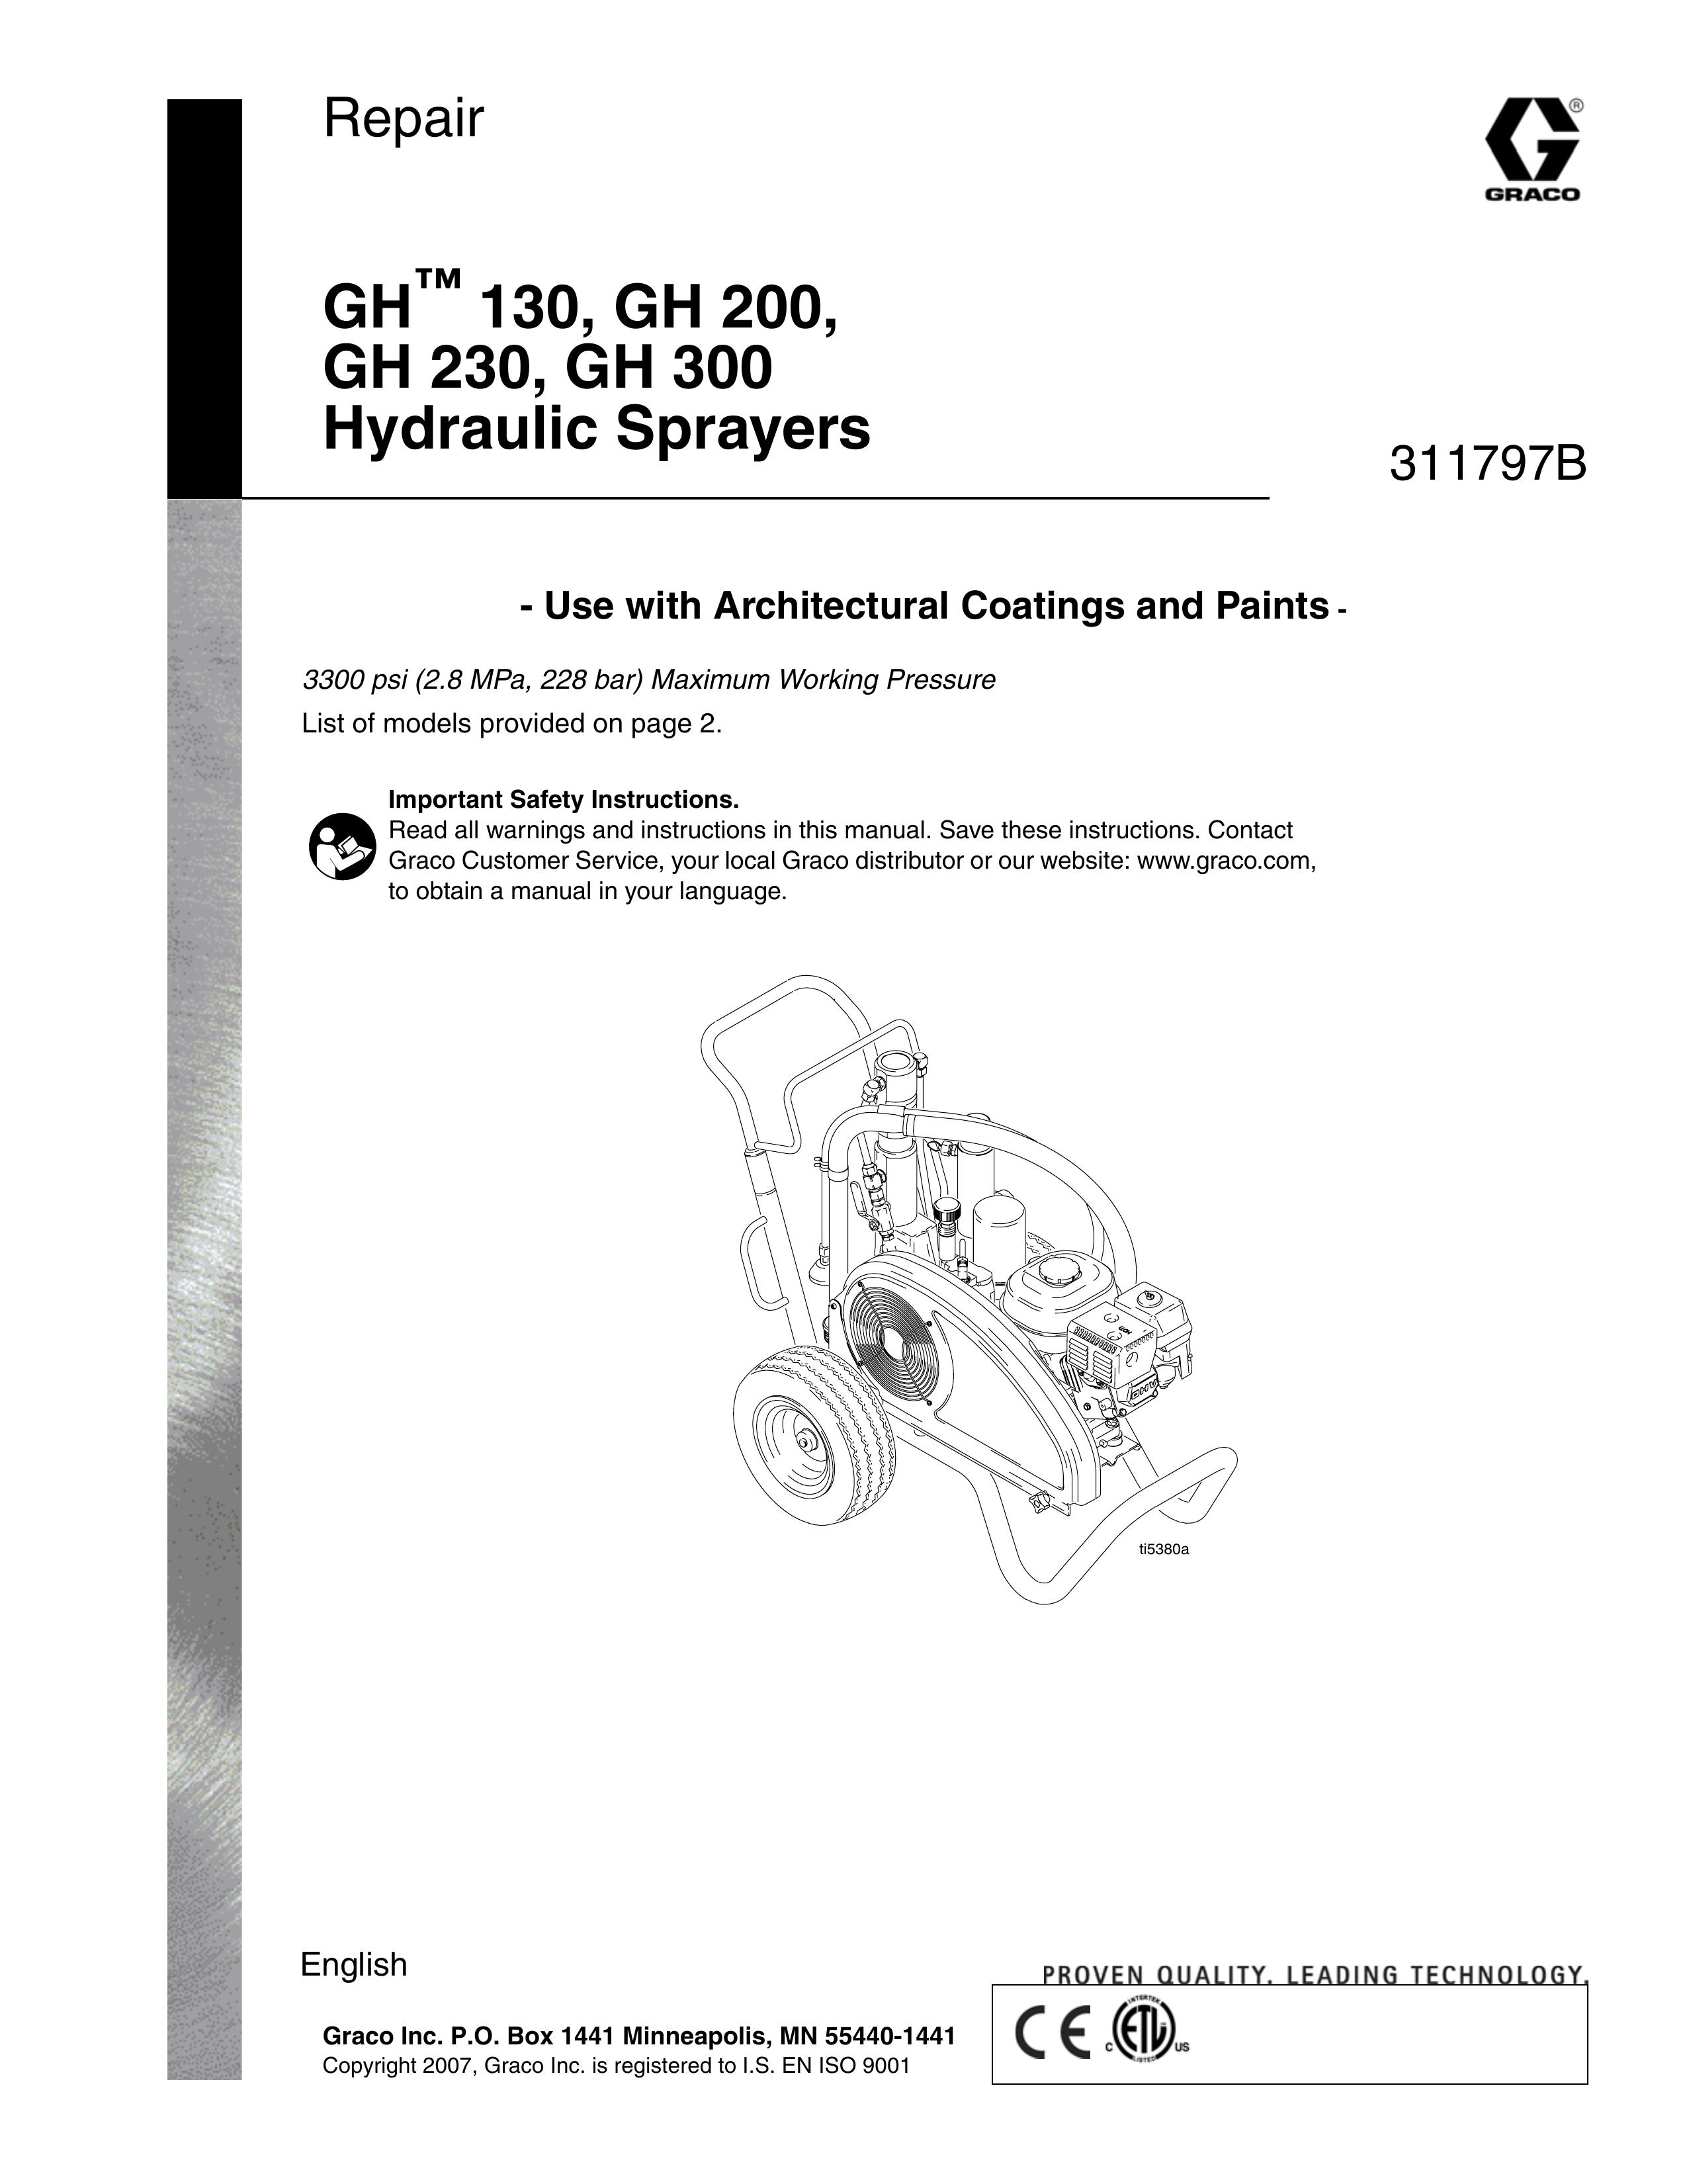 Uniden GH 200 Lawn Mower Accessory User Manual